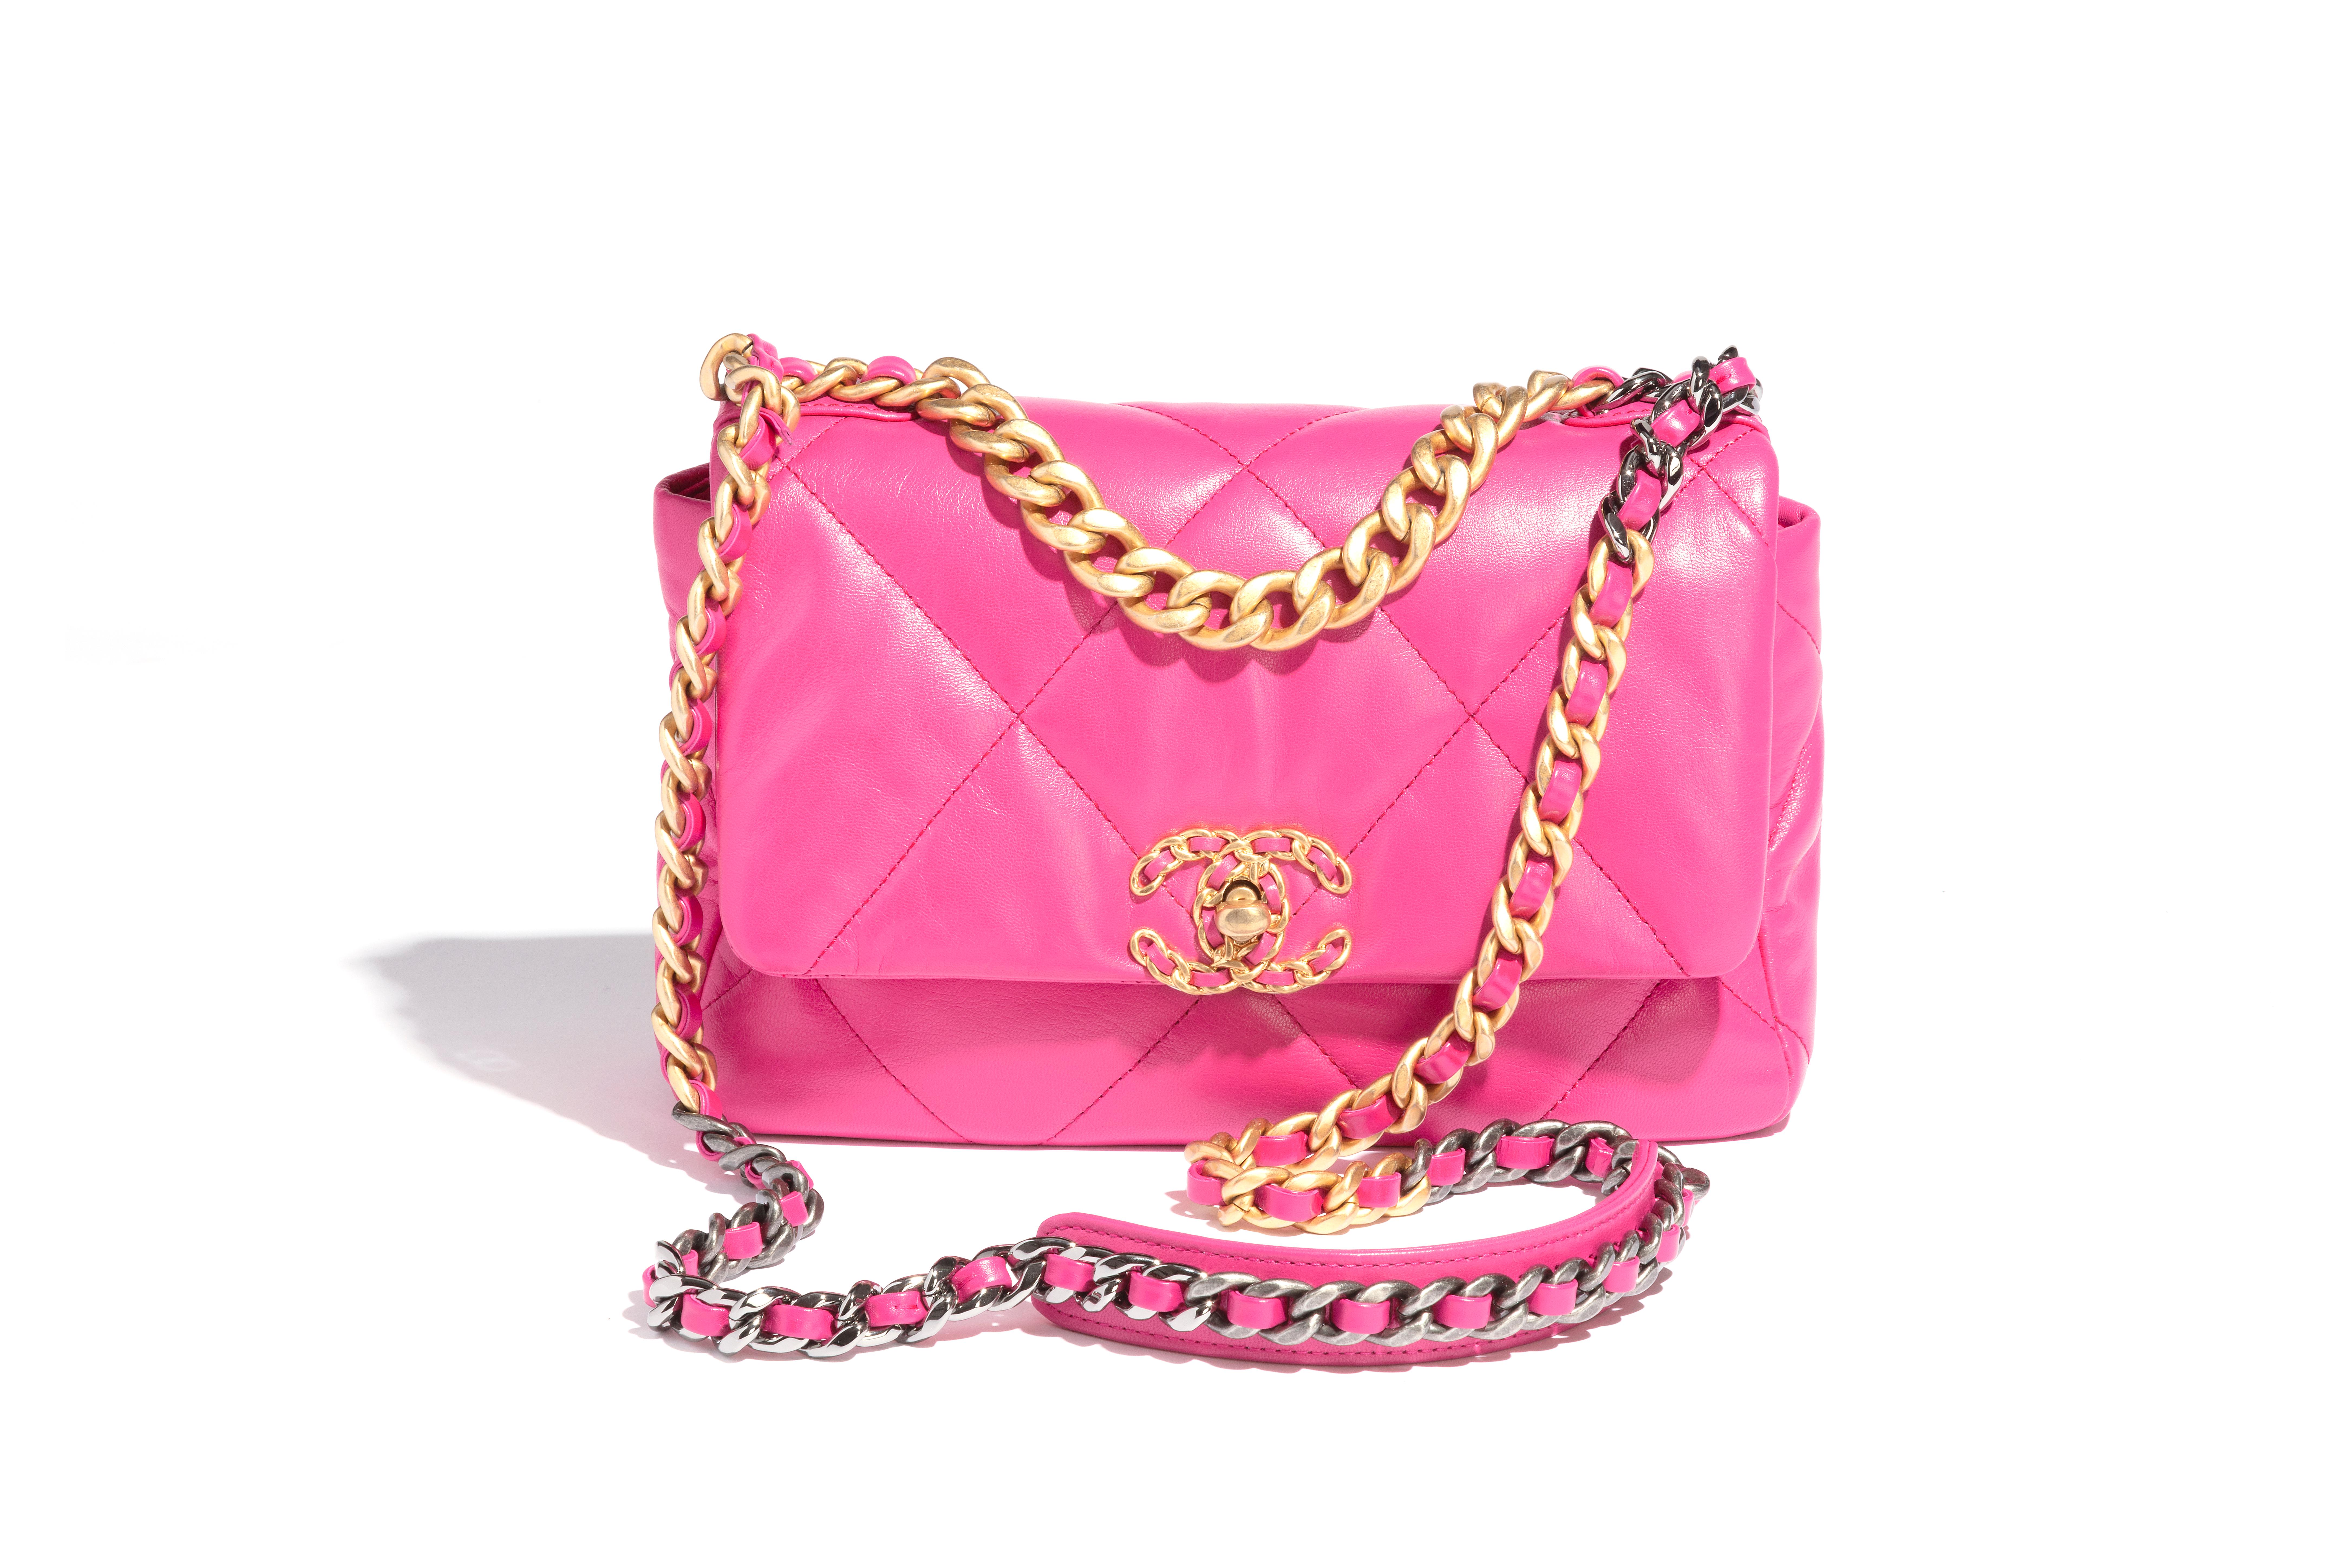 Chanel 19 Neon Pink Handbag 1